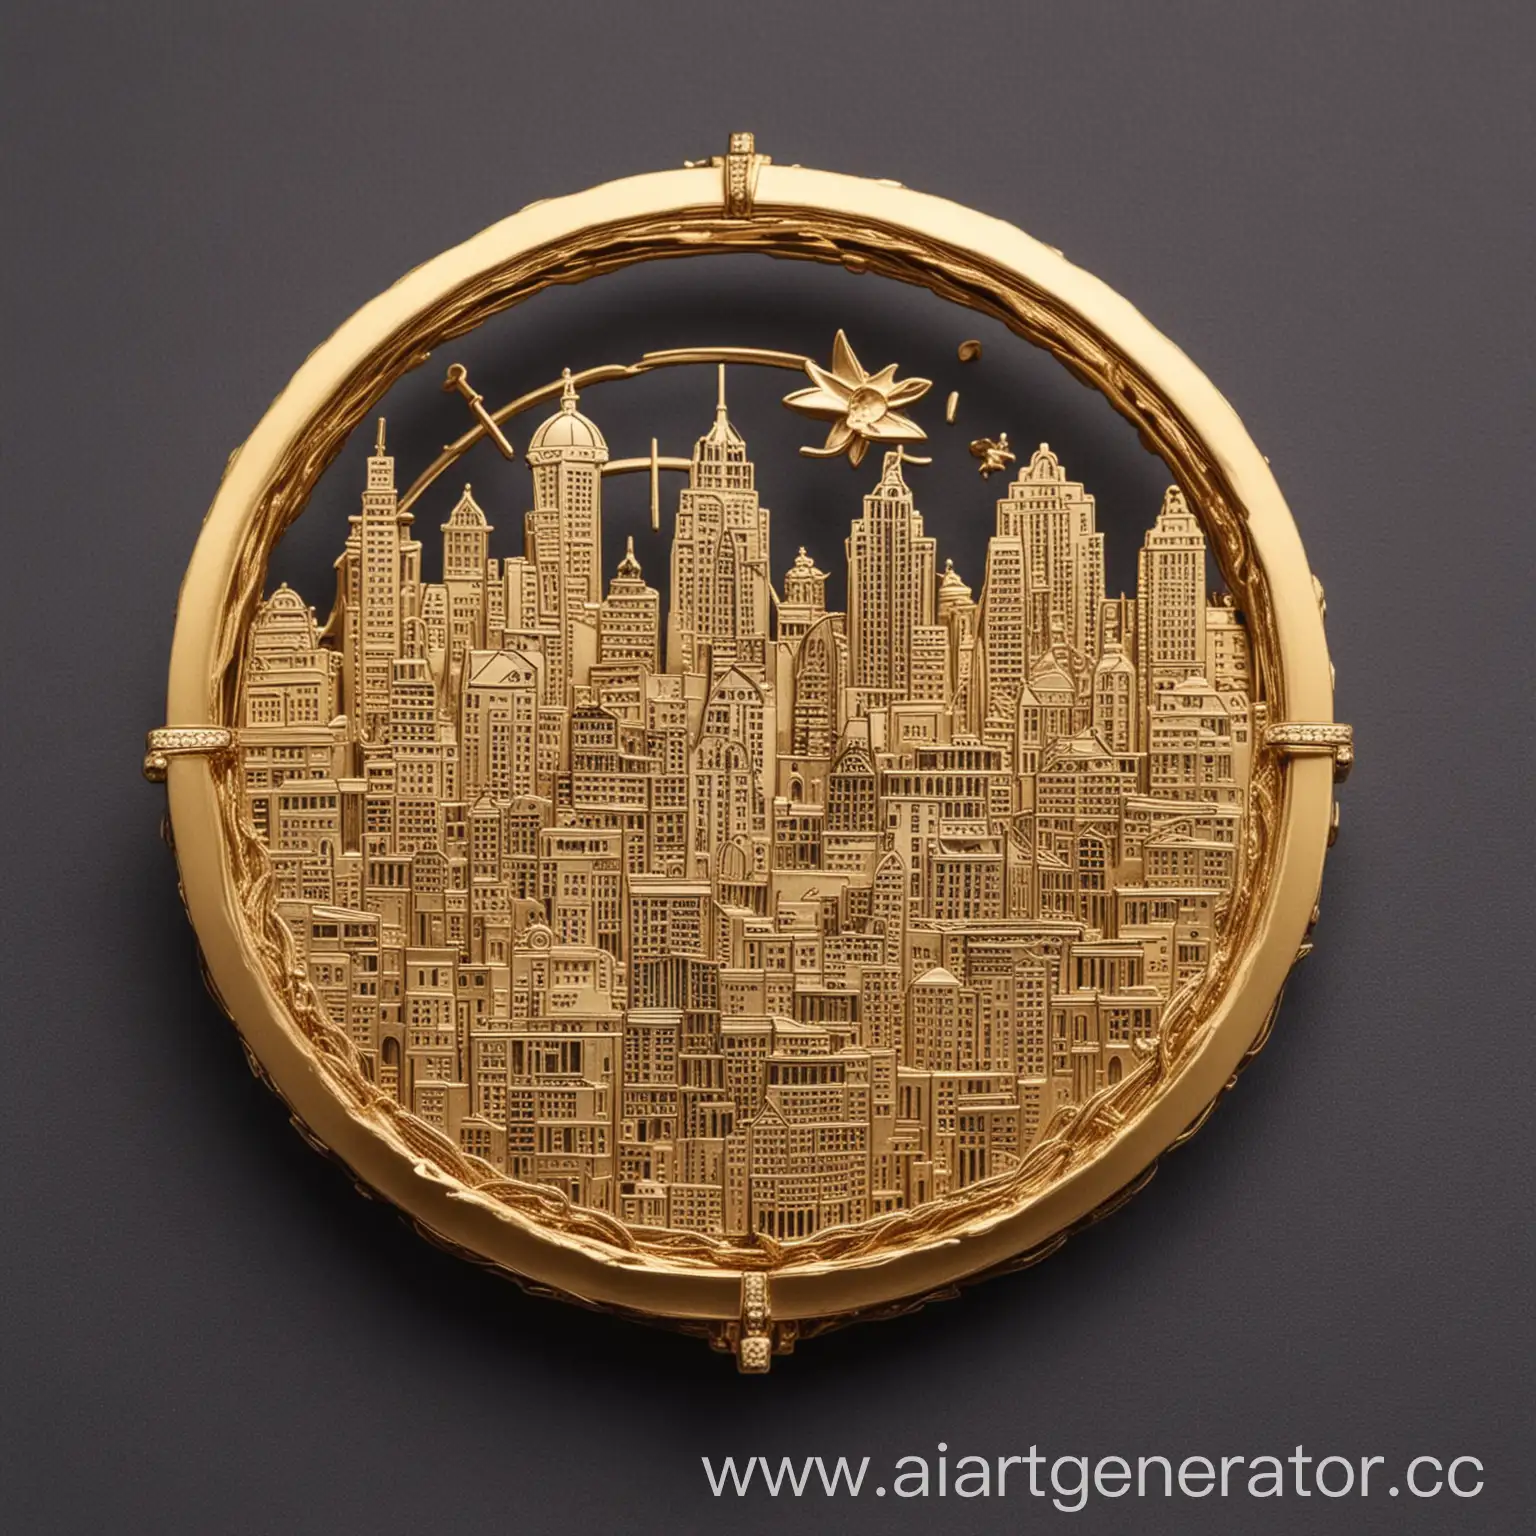 Elegant-Golden-Circle-Brooch-Featuring-Urban-Cityscape-Theme